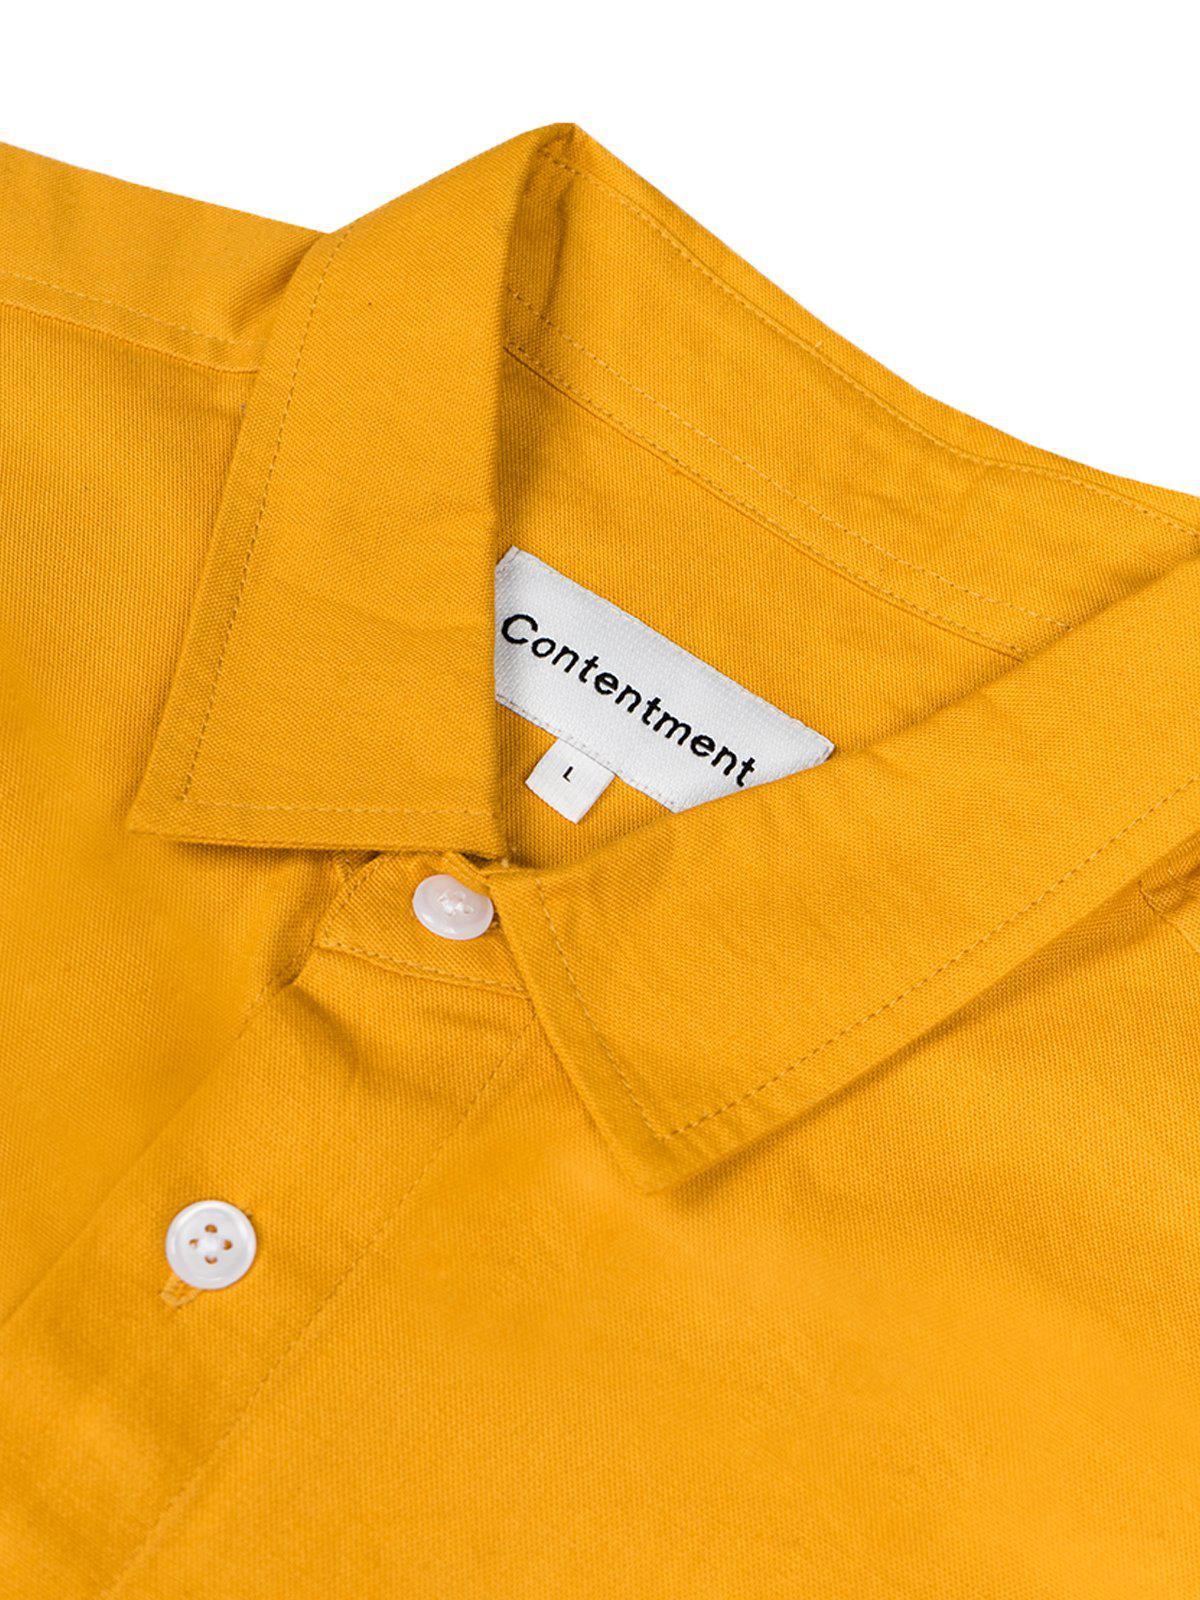 Contentment. Joy Mustard Linen Shirt - MORE by Morello Indonesia